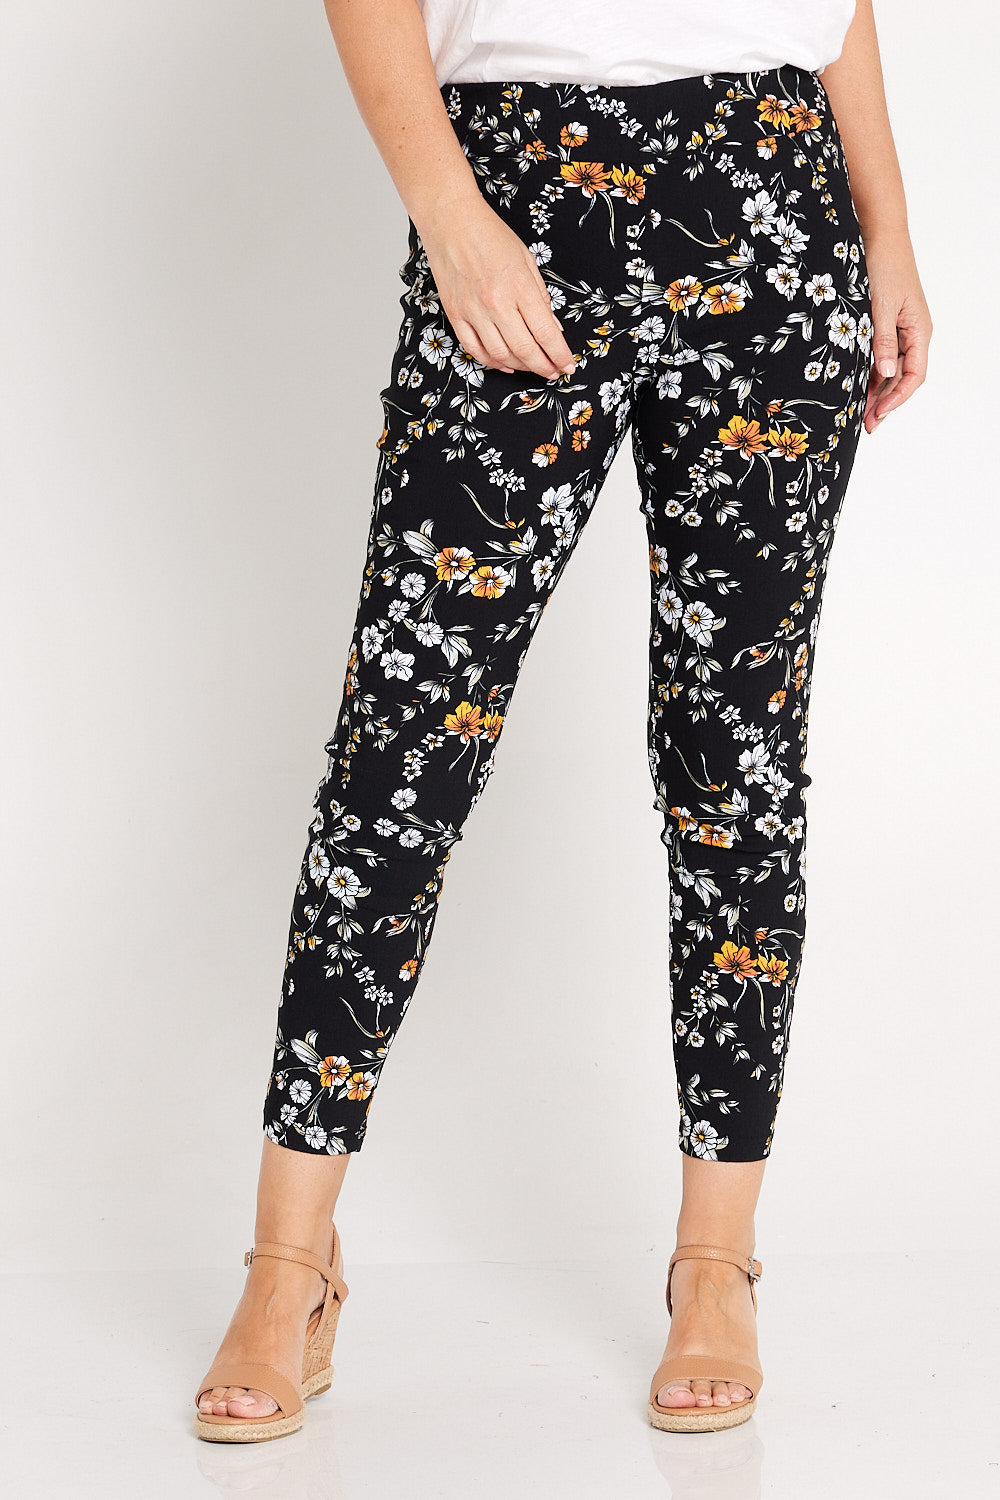 Calloway Pants - Black Floral  Australian Made Fashion for Women